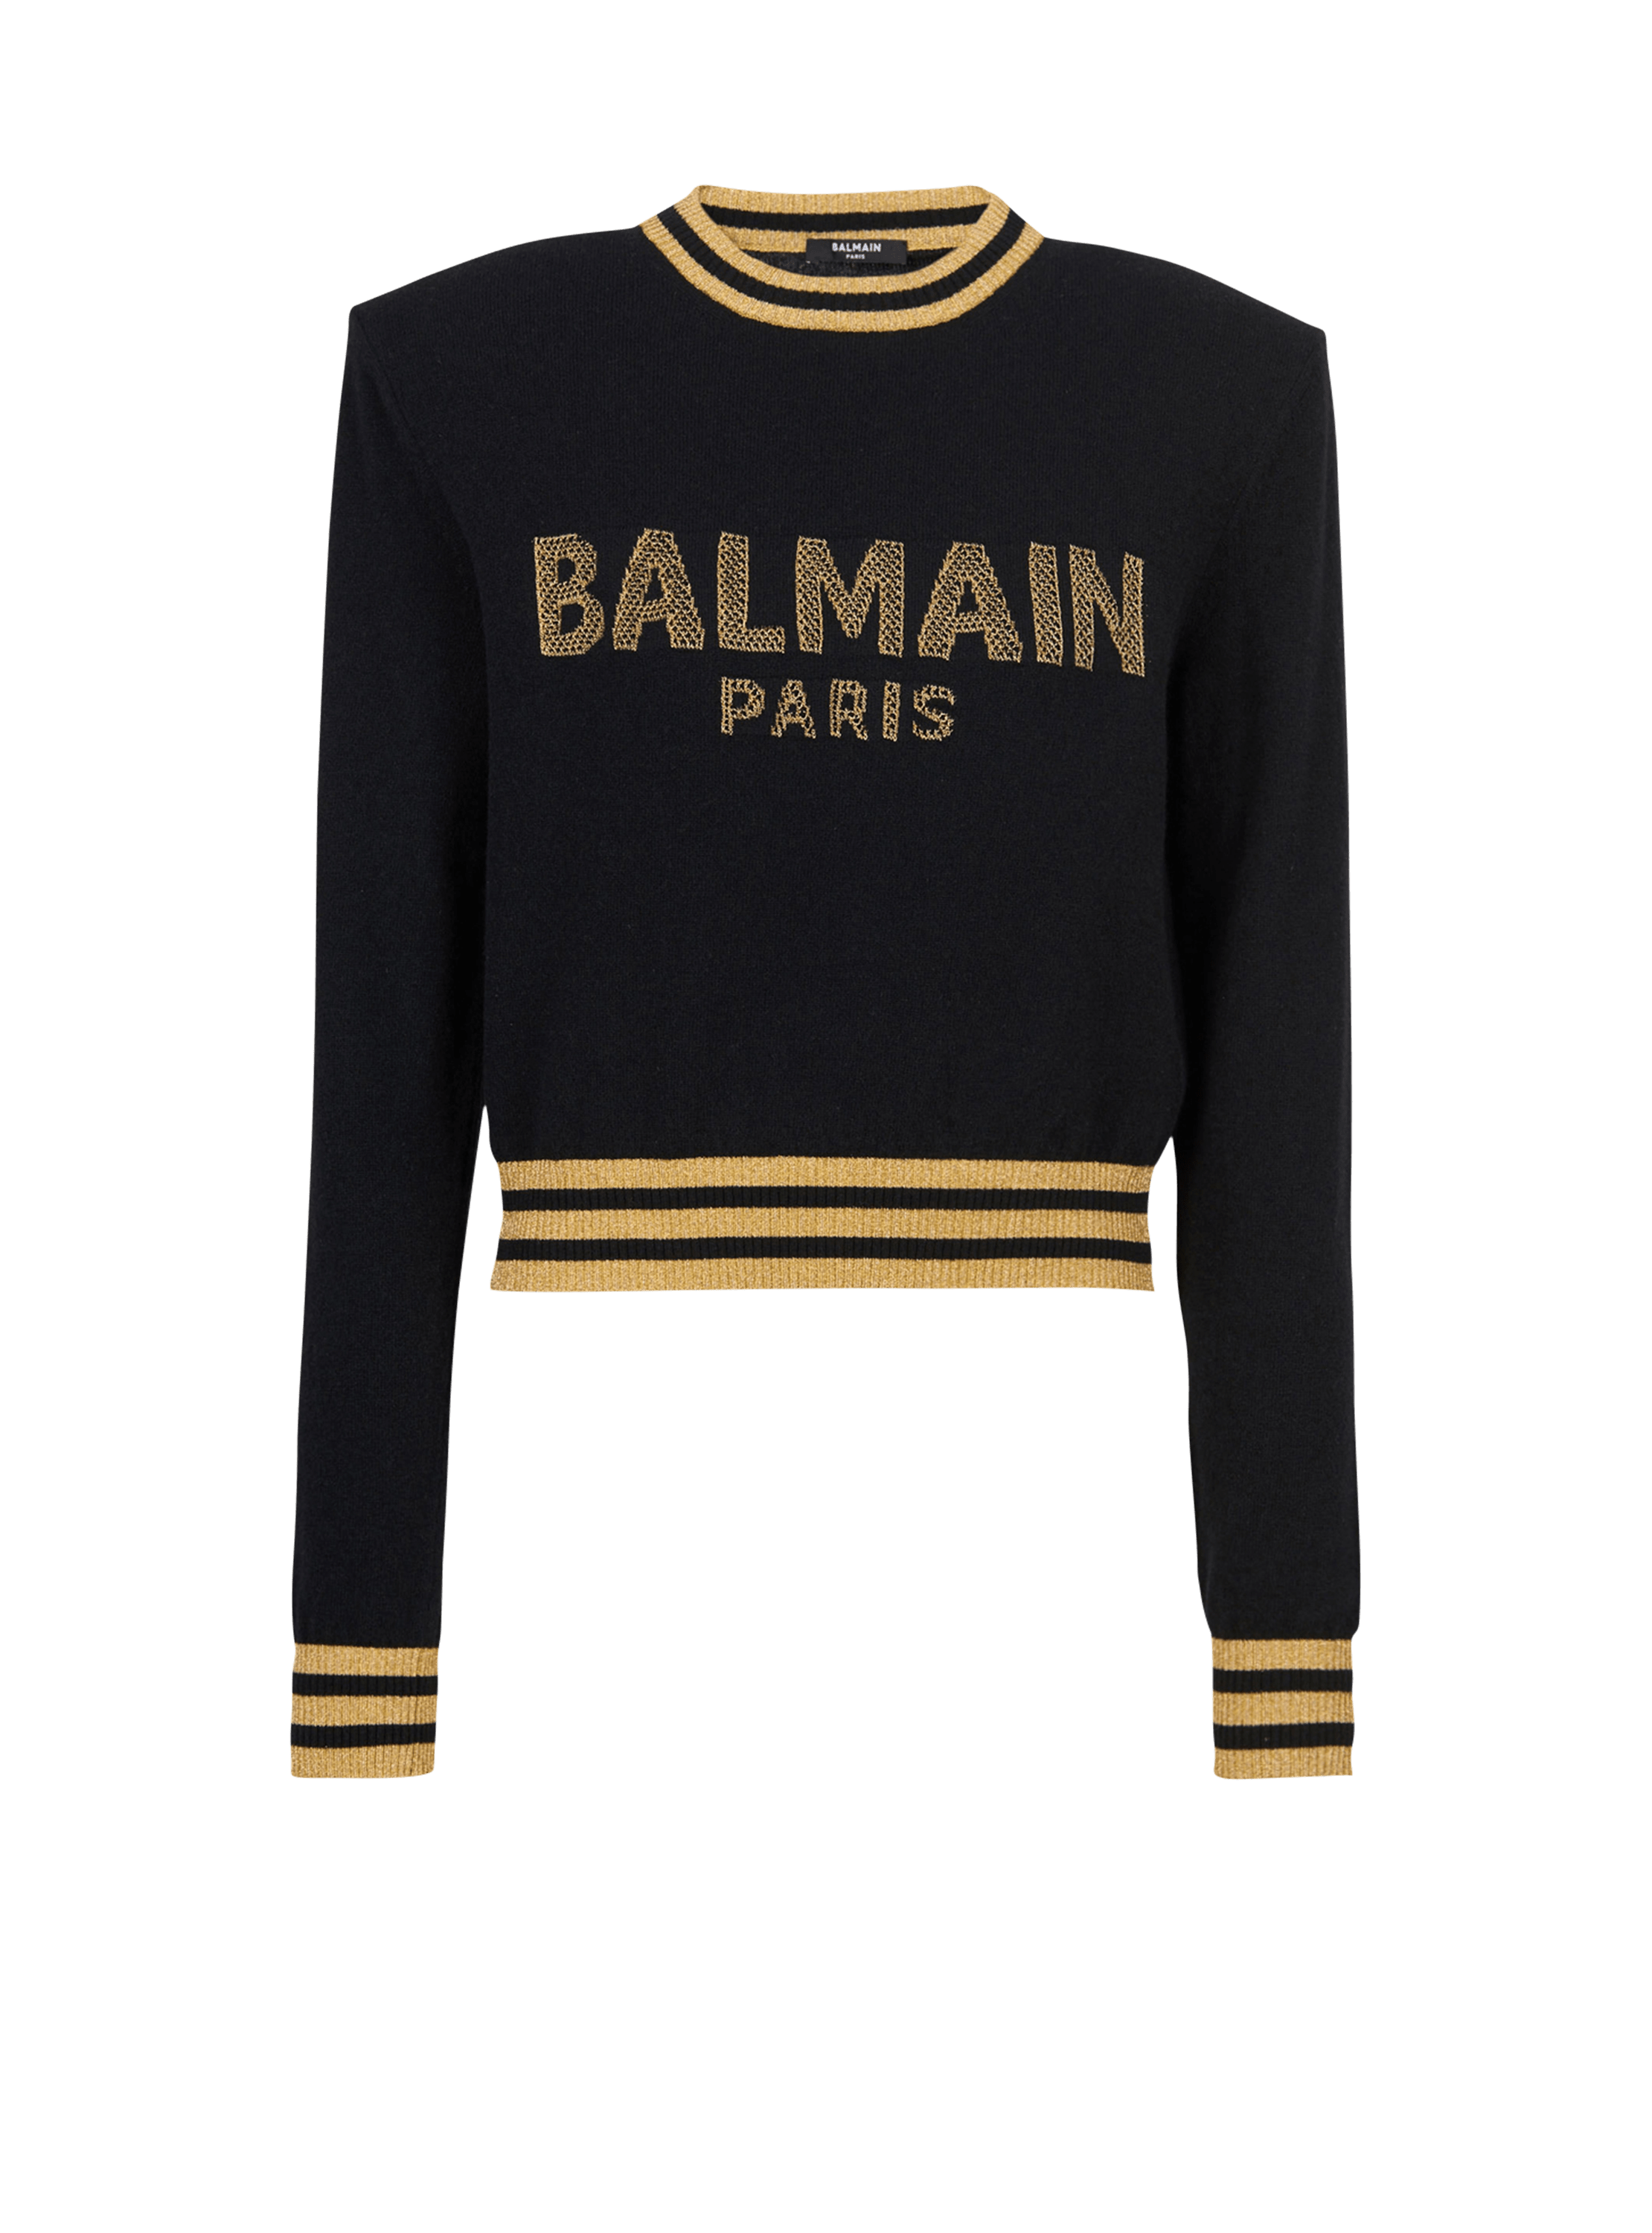 Felpa corta in lana con logo Balmain, nero, hi-res